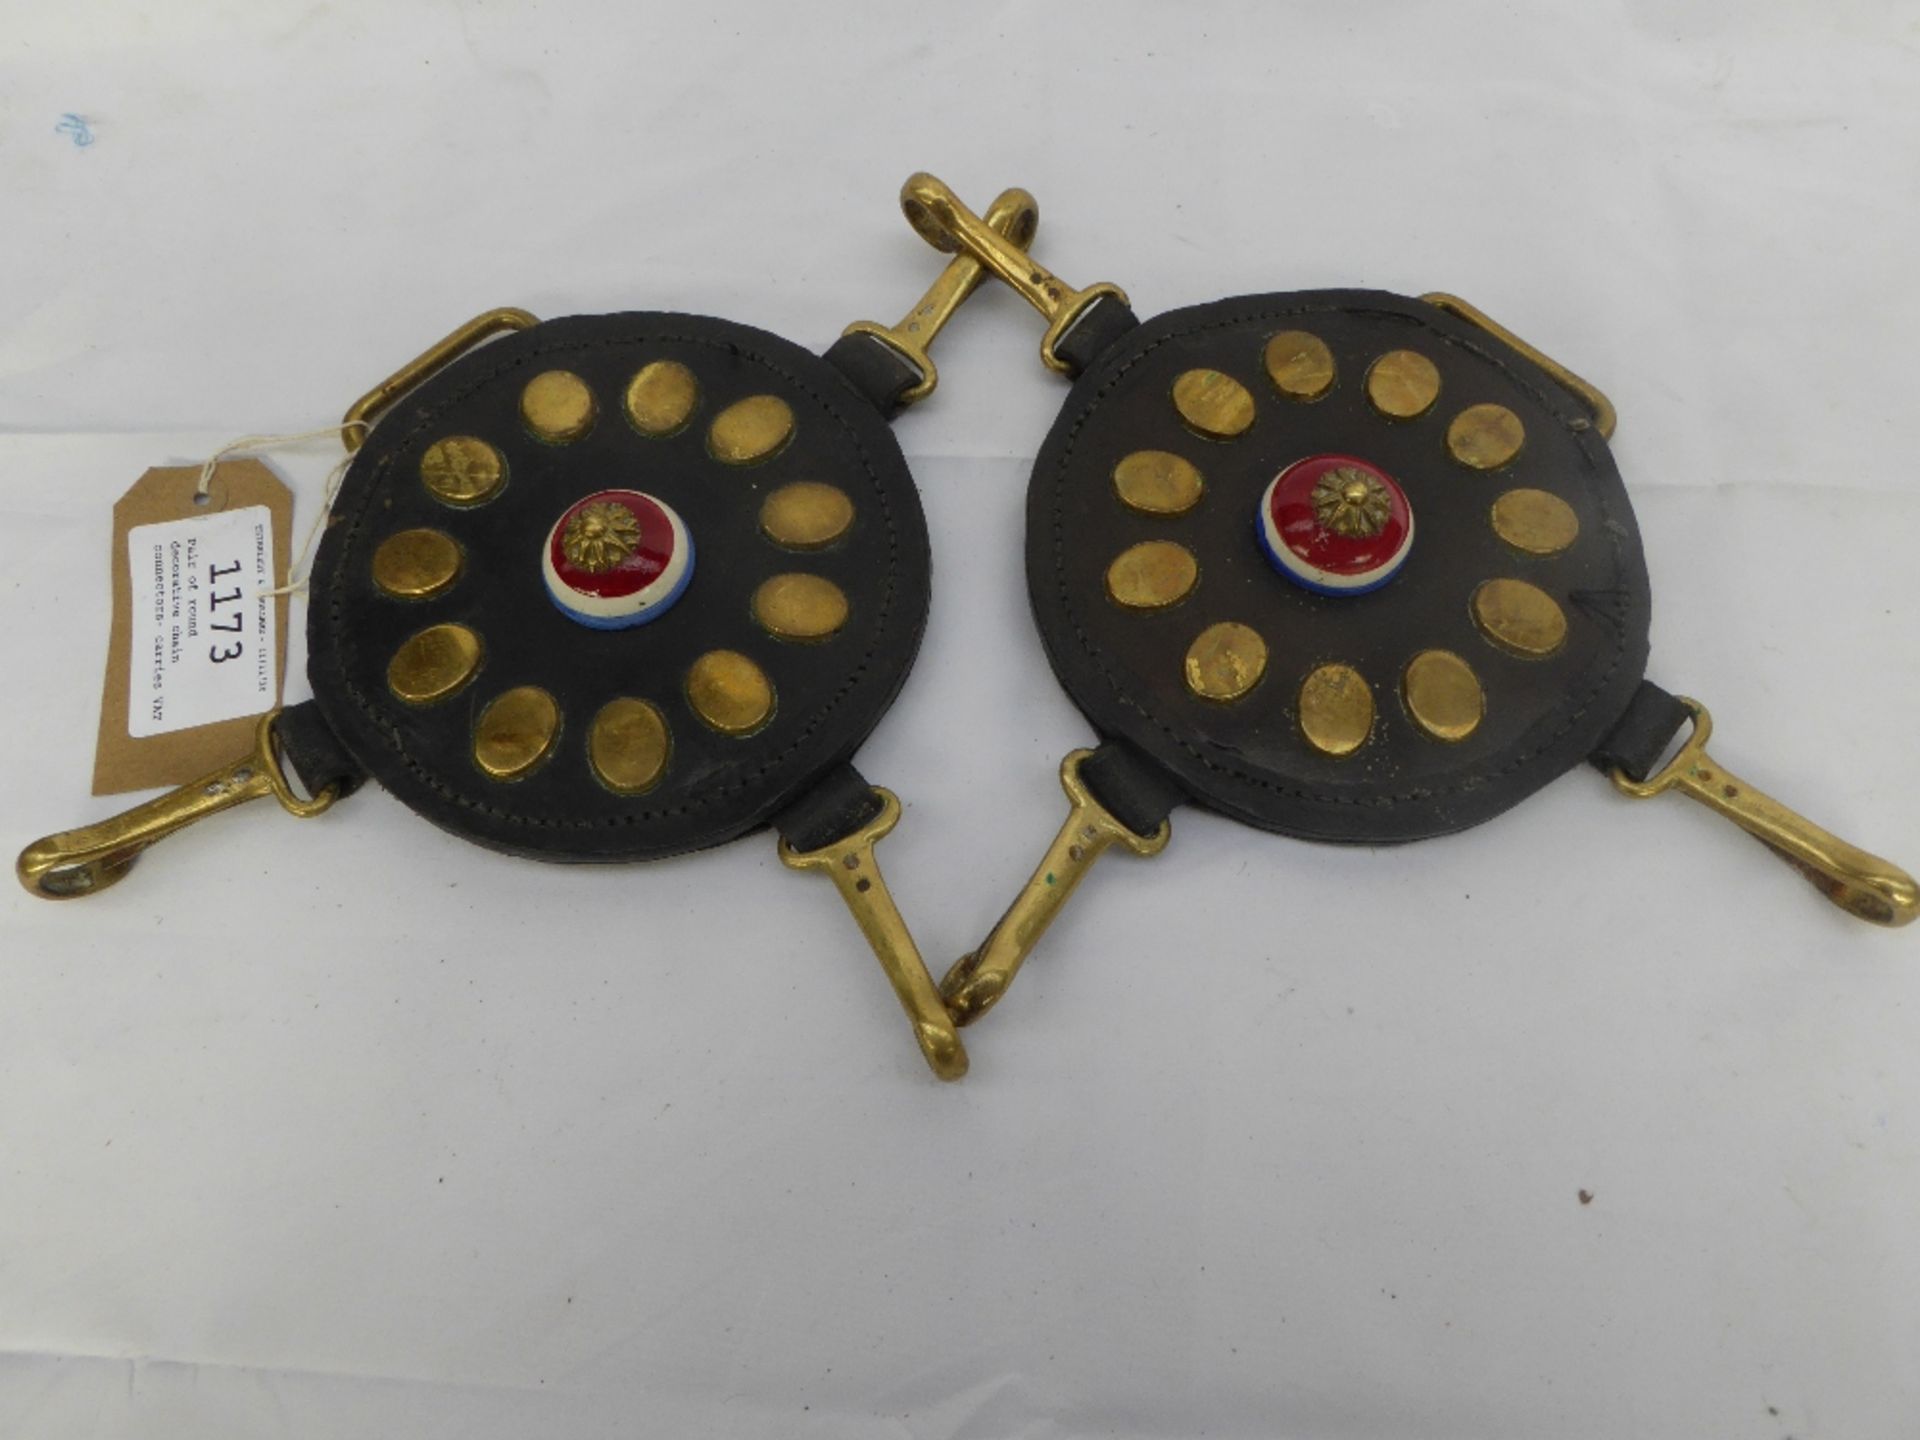 Pair of round decorative chain connectors- carries VAT